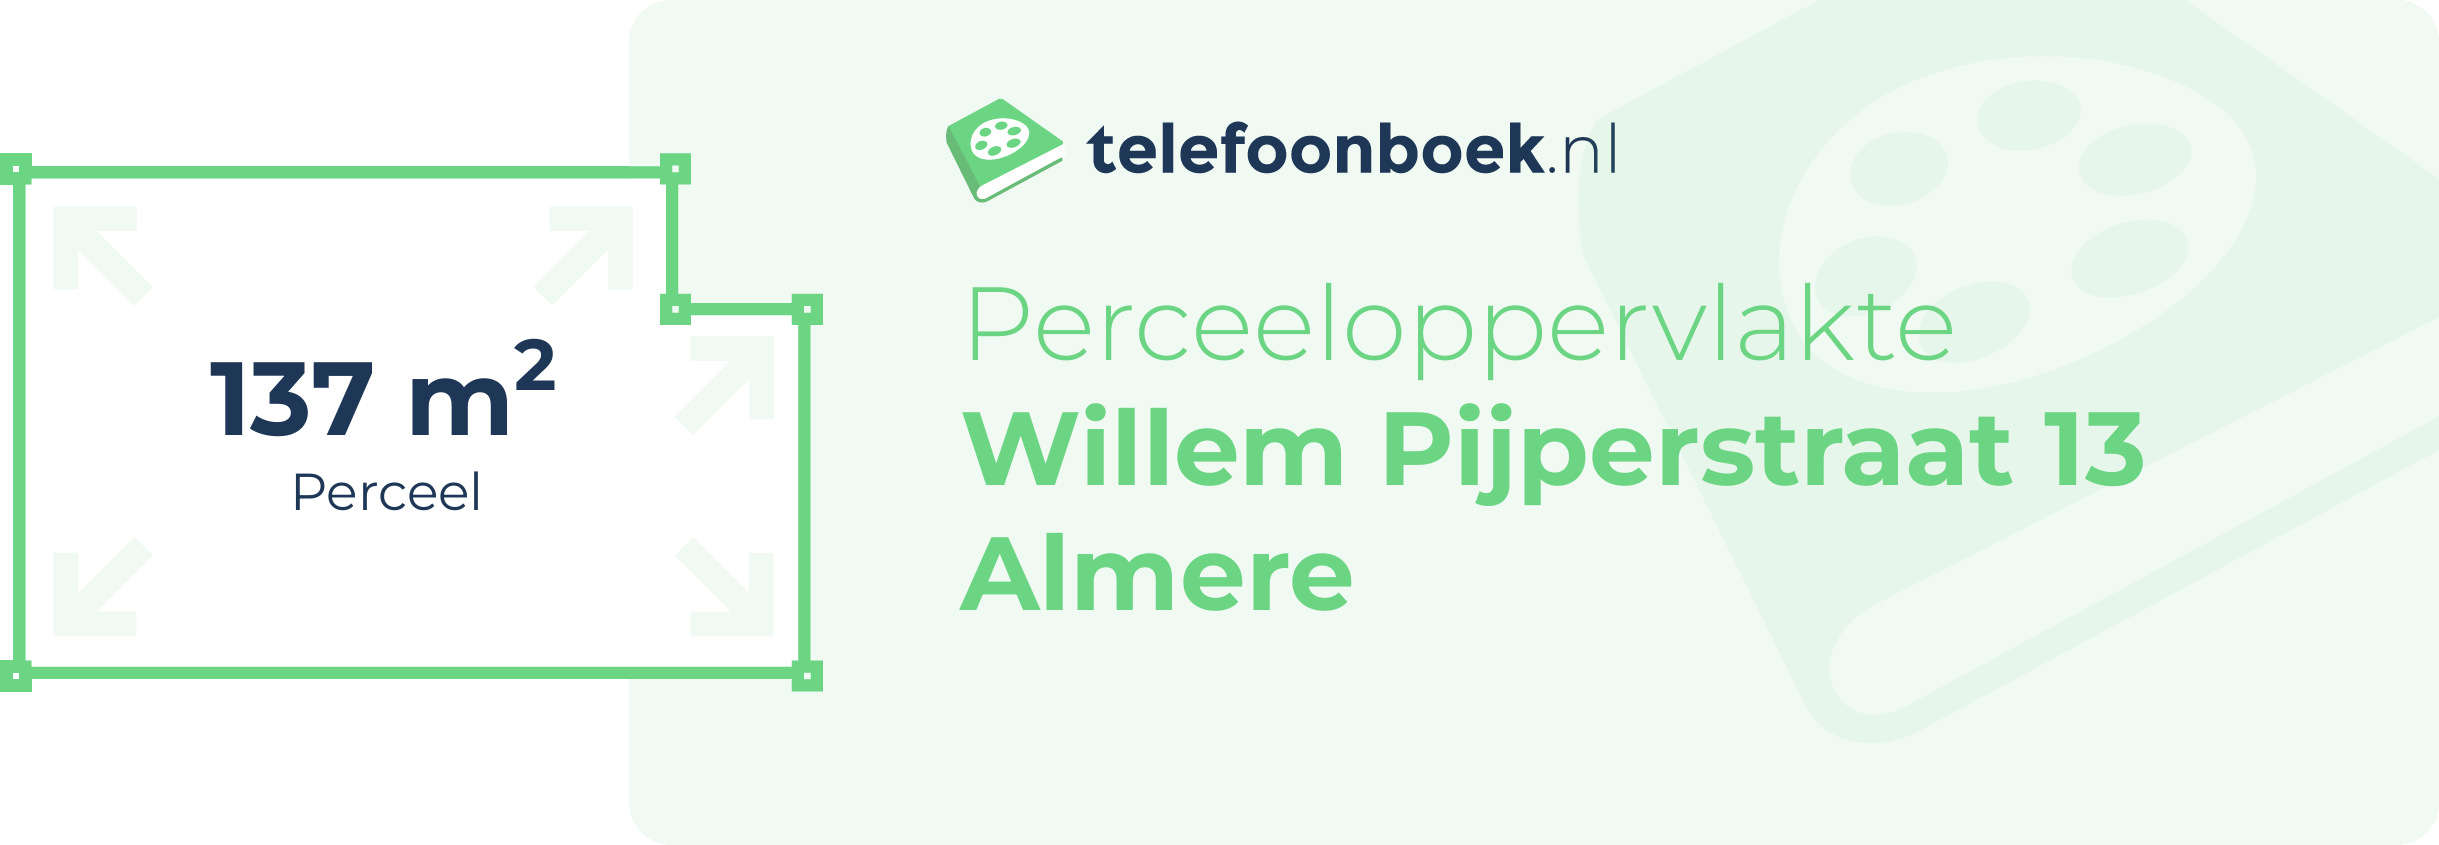 Perceeloppervlakte Willem Pijperstraat 13 Almere